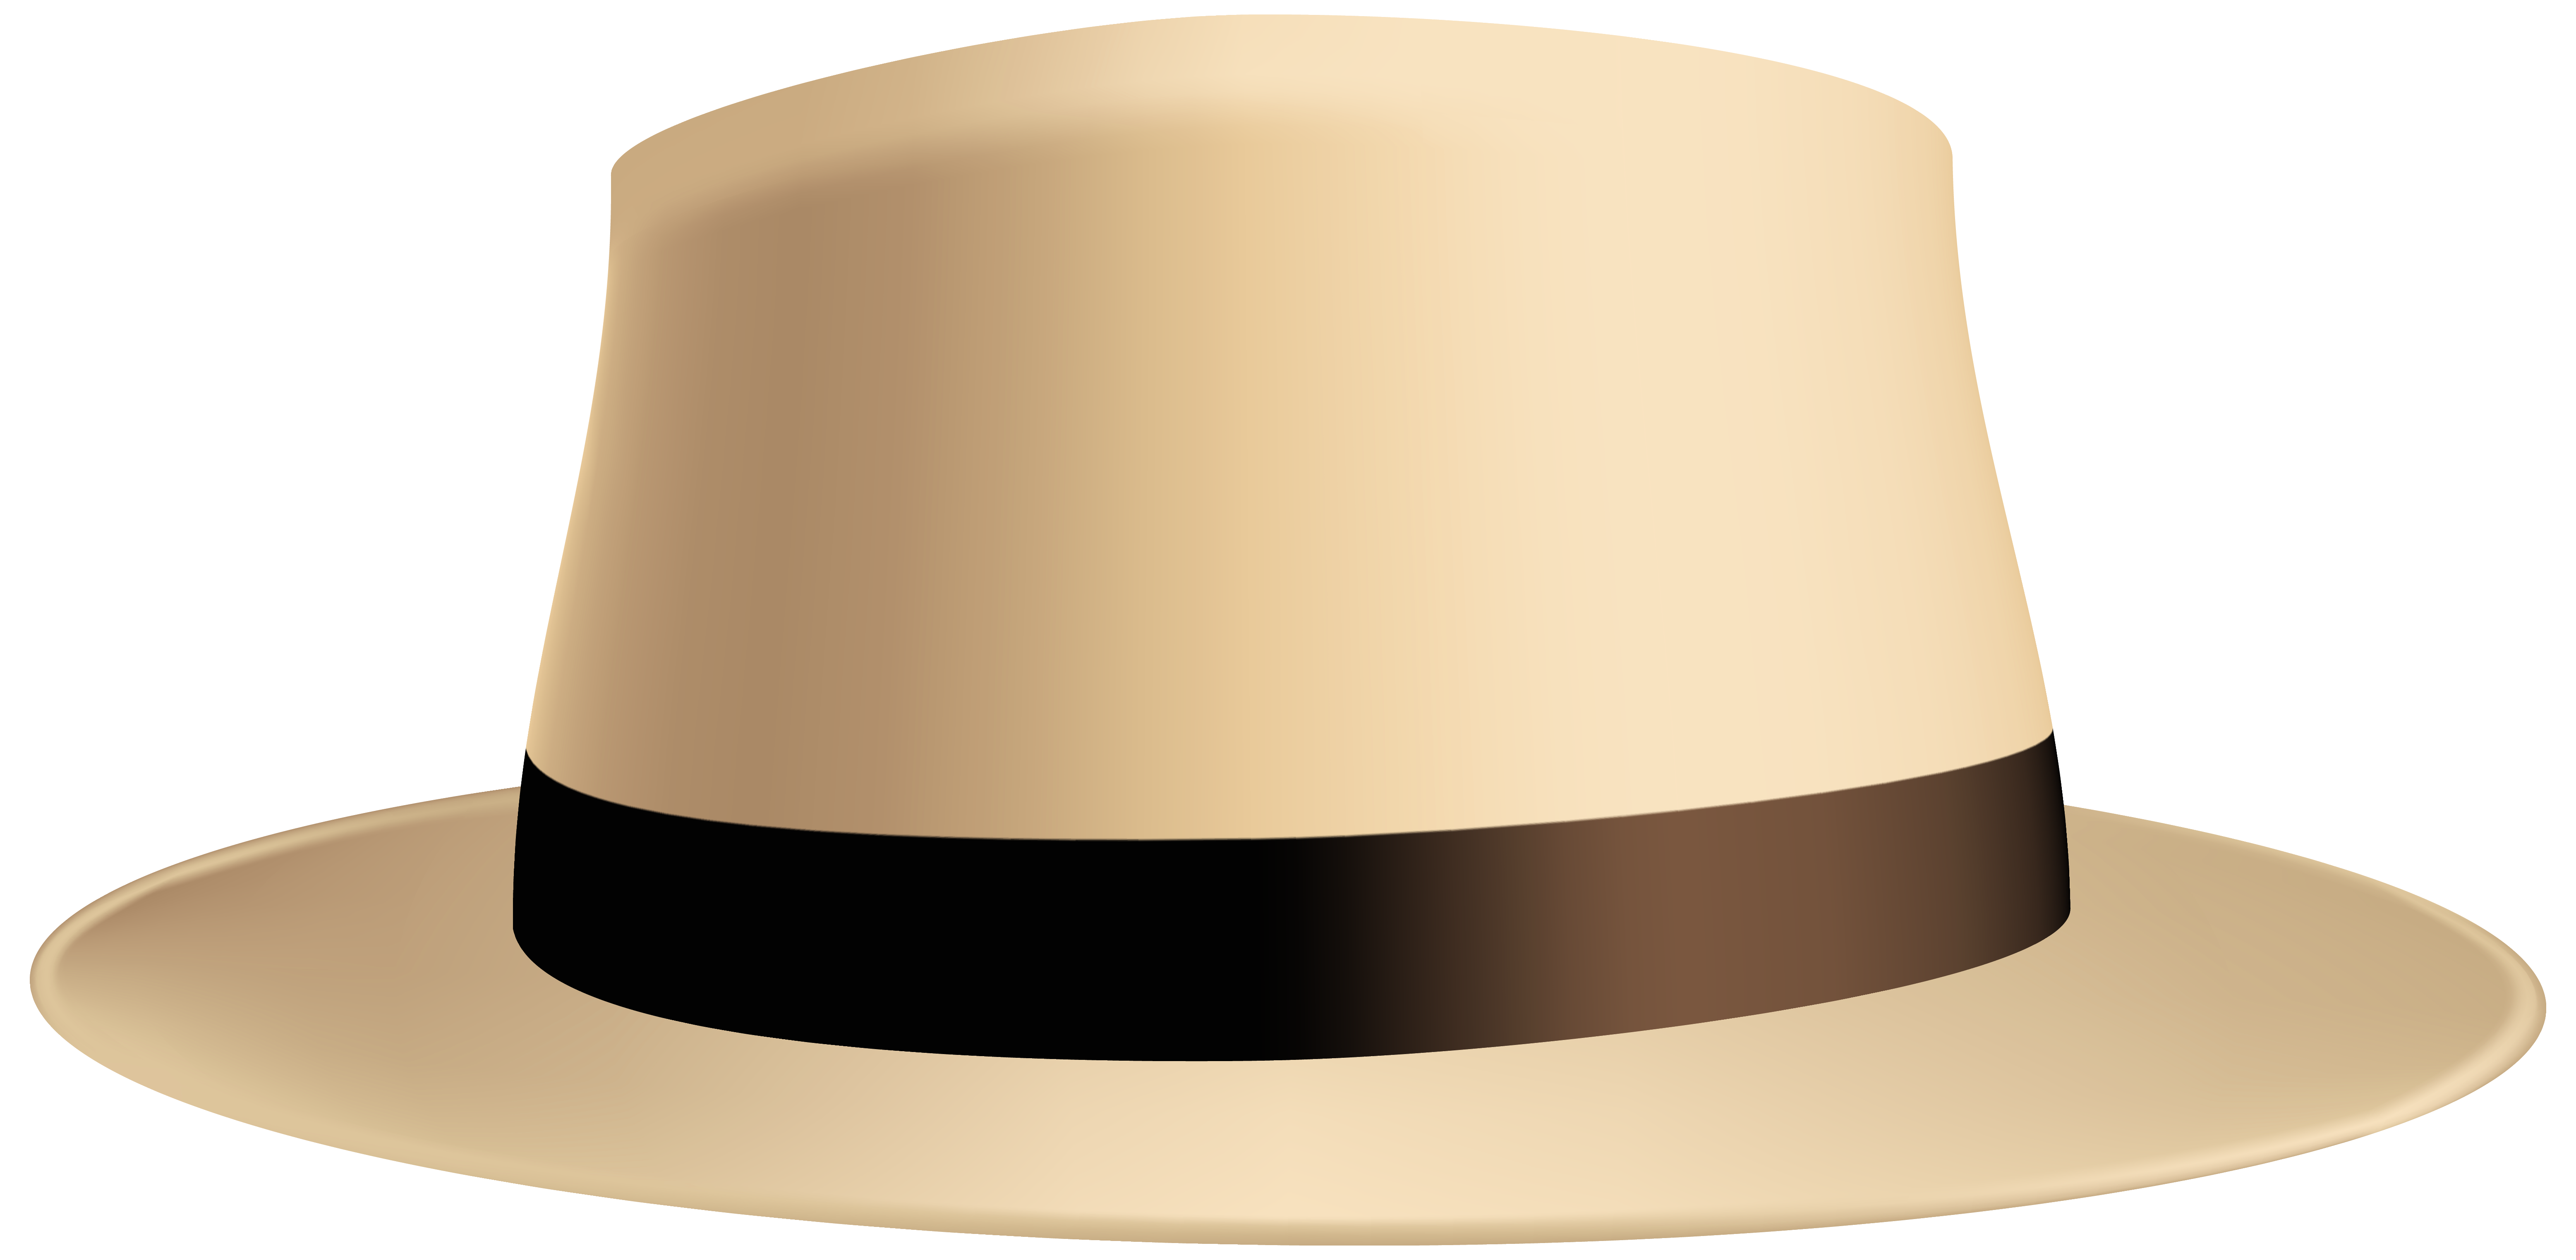 Male Summer Hat PNG Clip Art Image